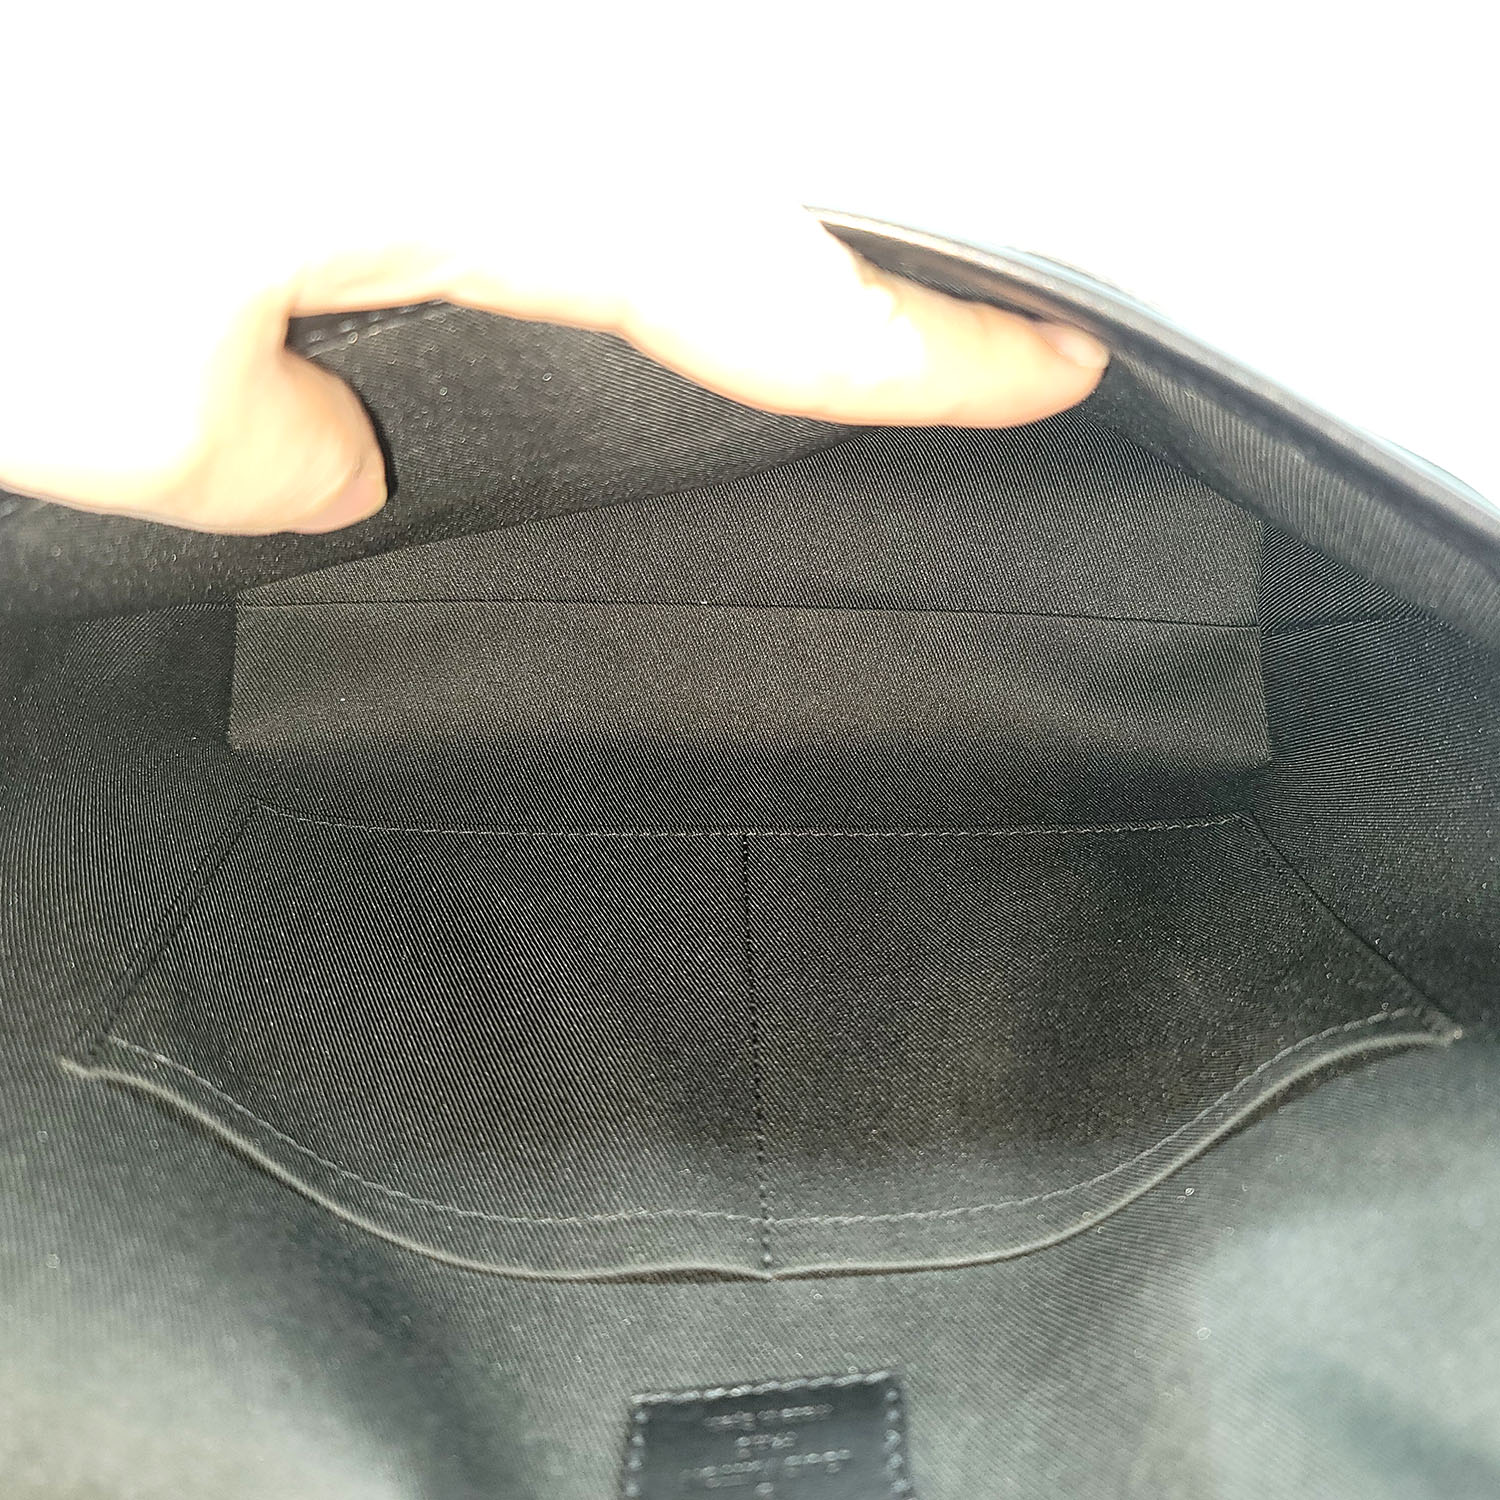 LOUIS VUITTON Magnetic Messenger Bag M45557 Brown Leather 315 x 220 x 80 mm  070